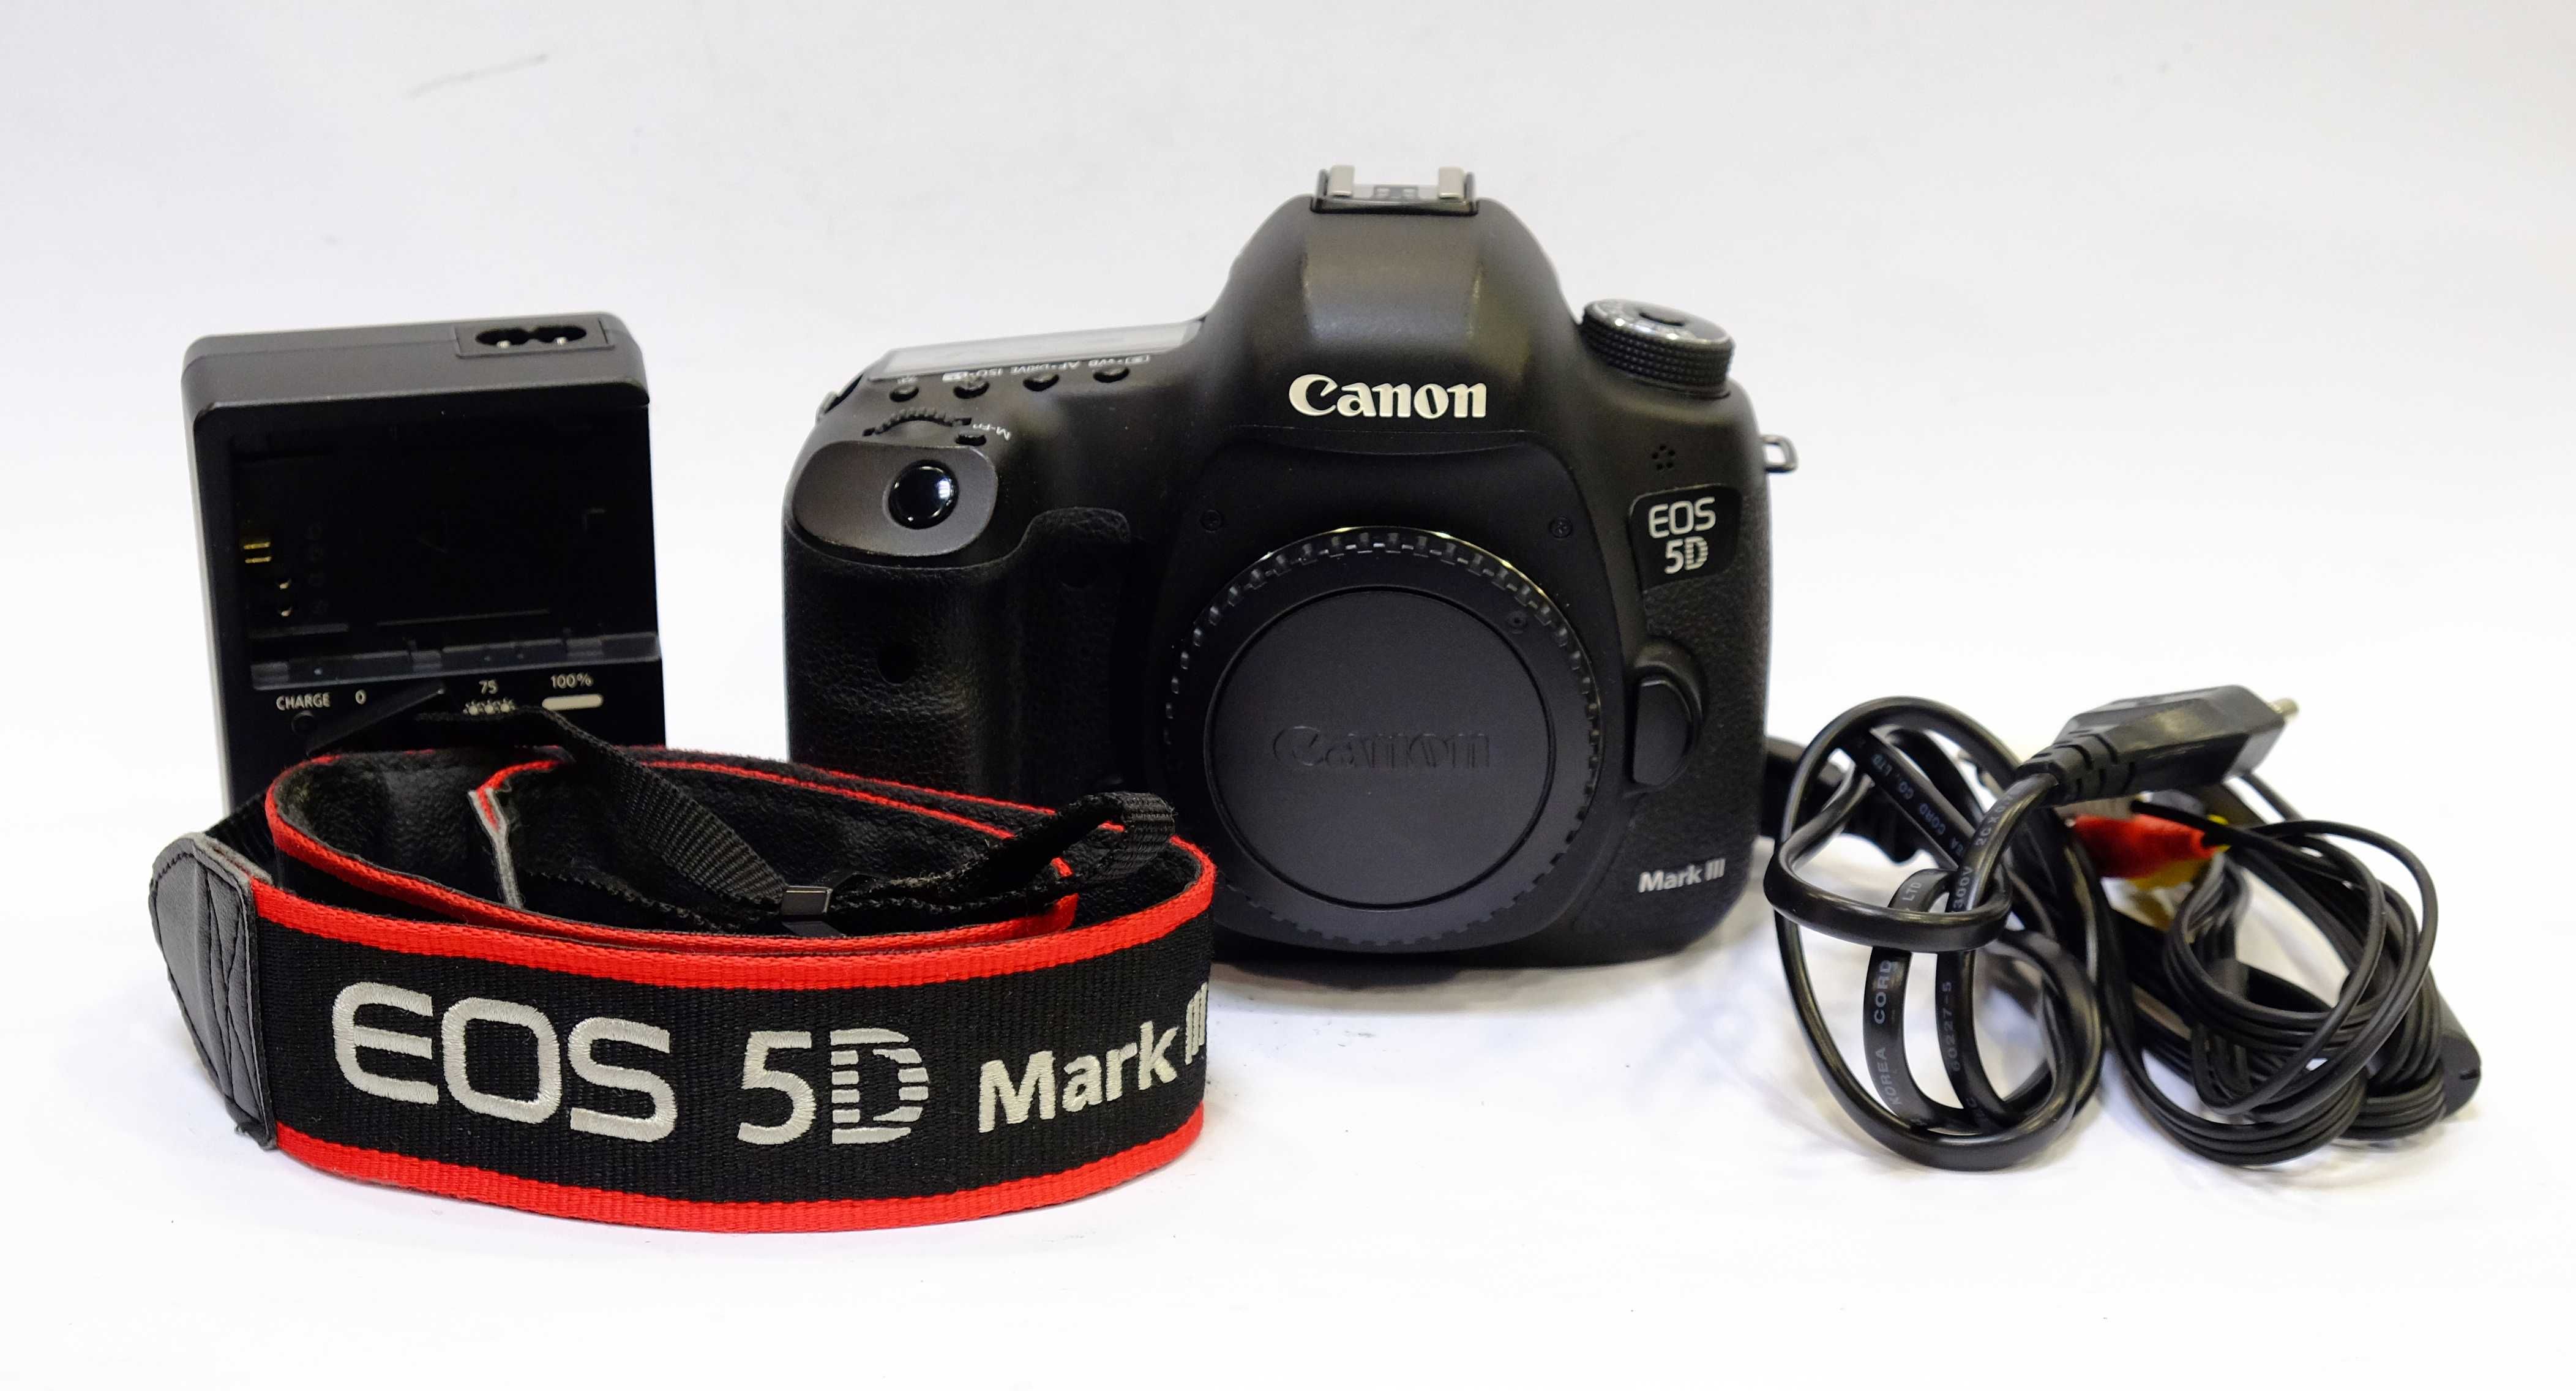 Aparat Canon Eos 5D Mark III. Gwarancja!